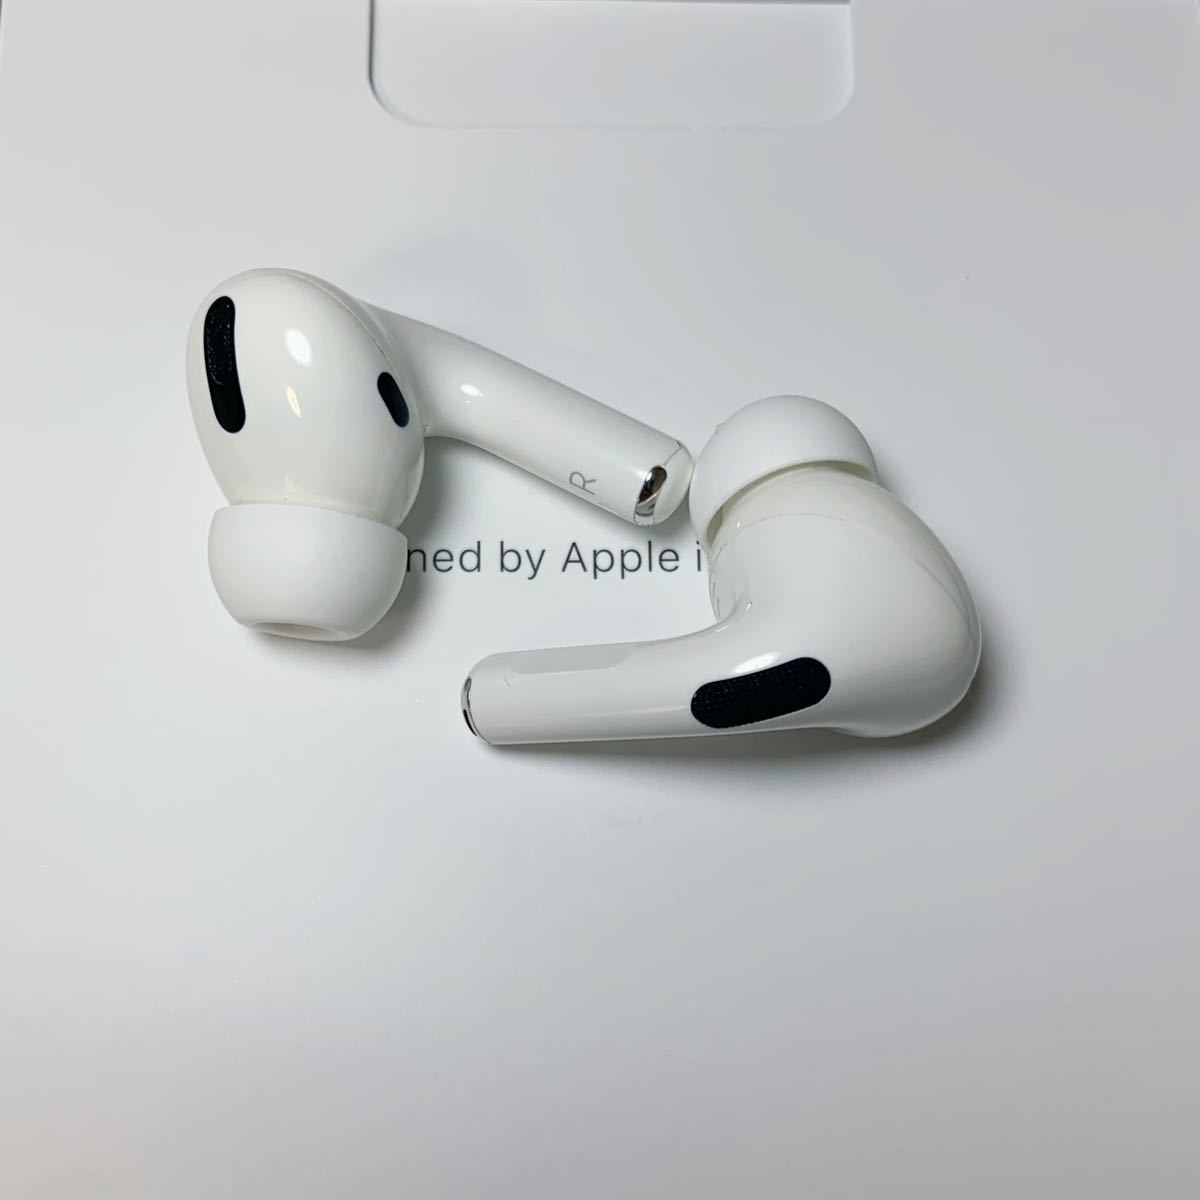 割引クーポン配布中!! Apple純正品 AirPods Pro 第一世代 左右両耳 